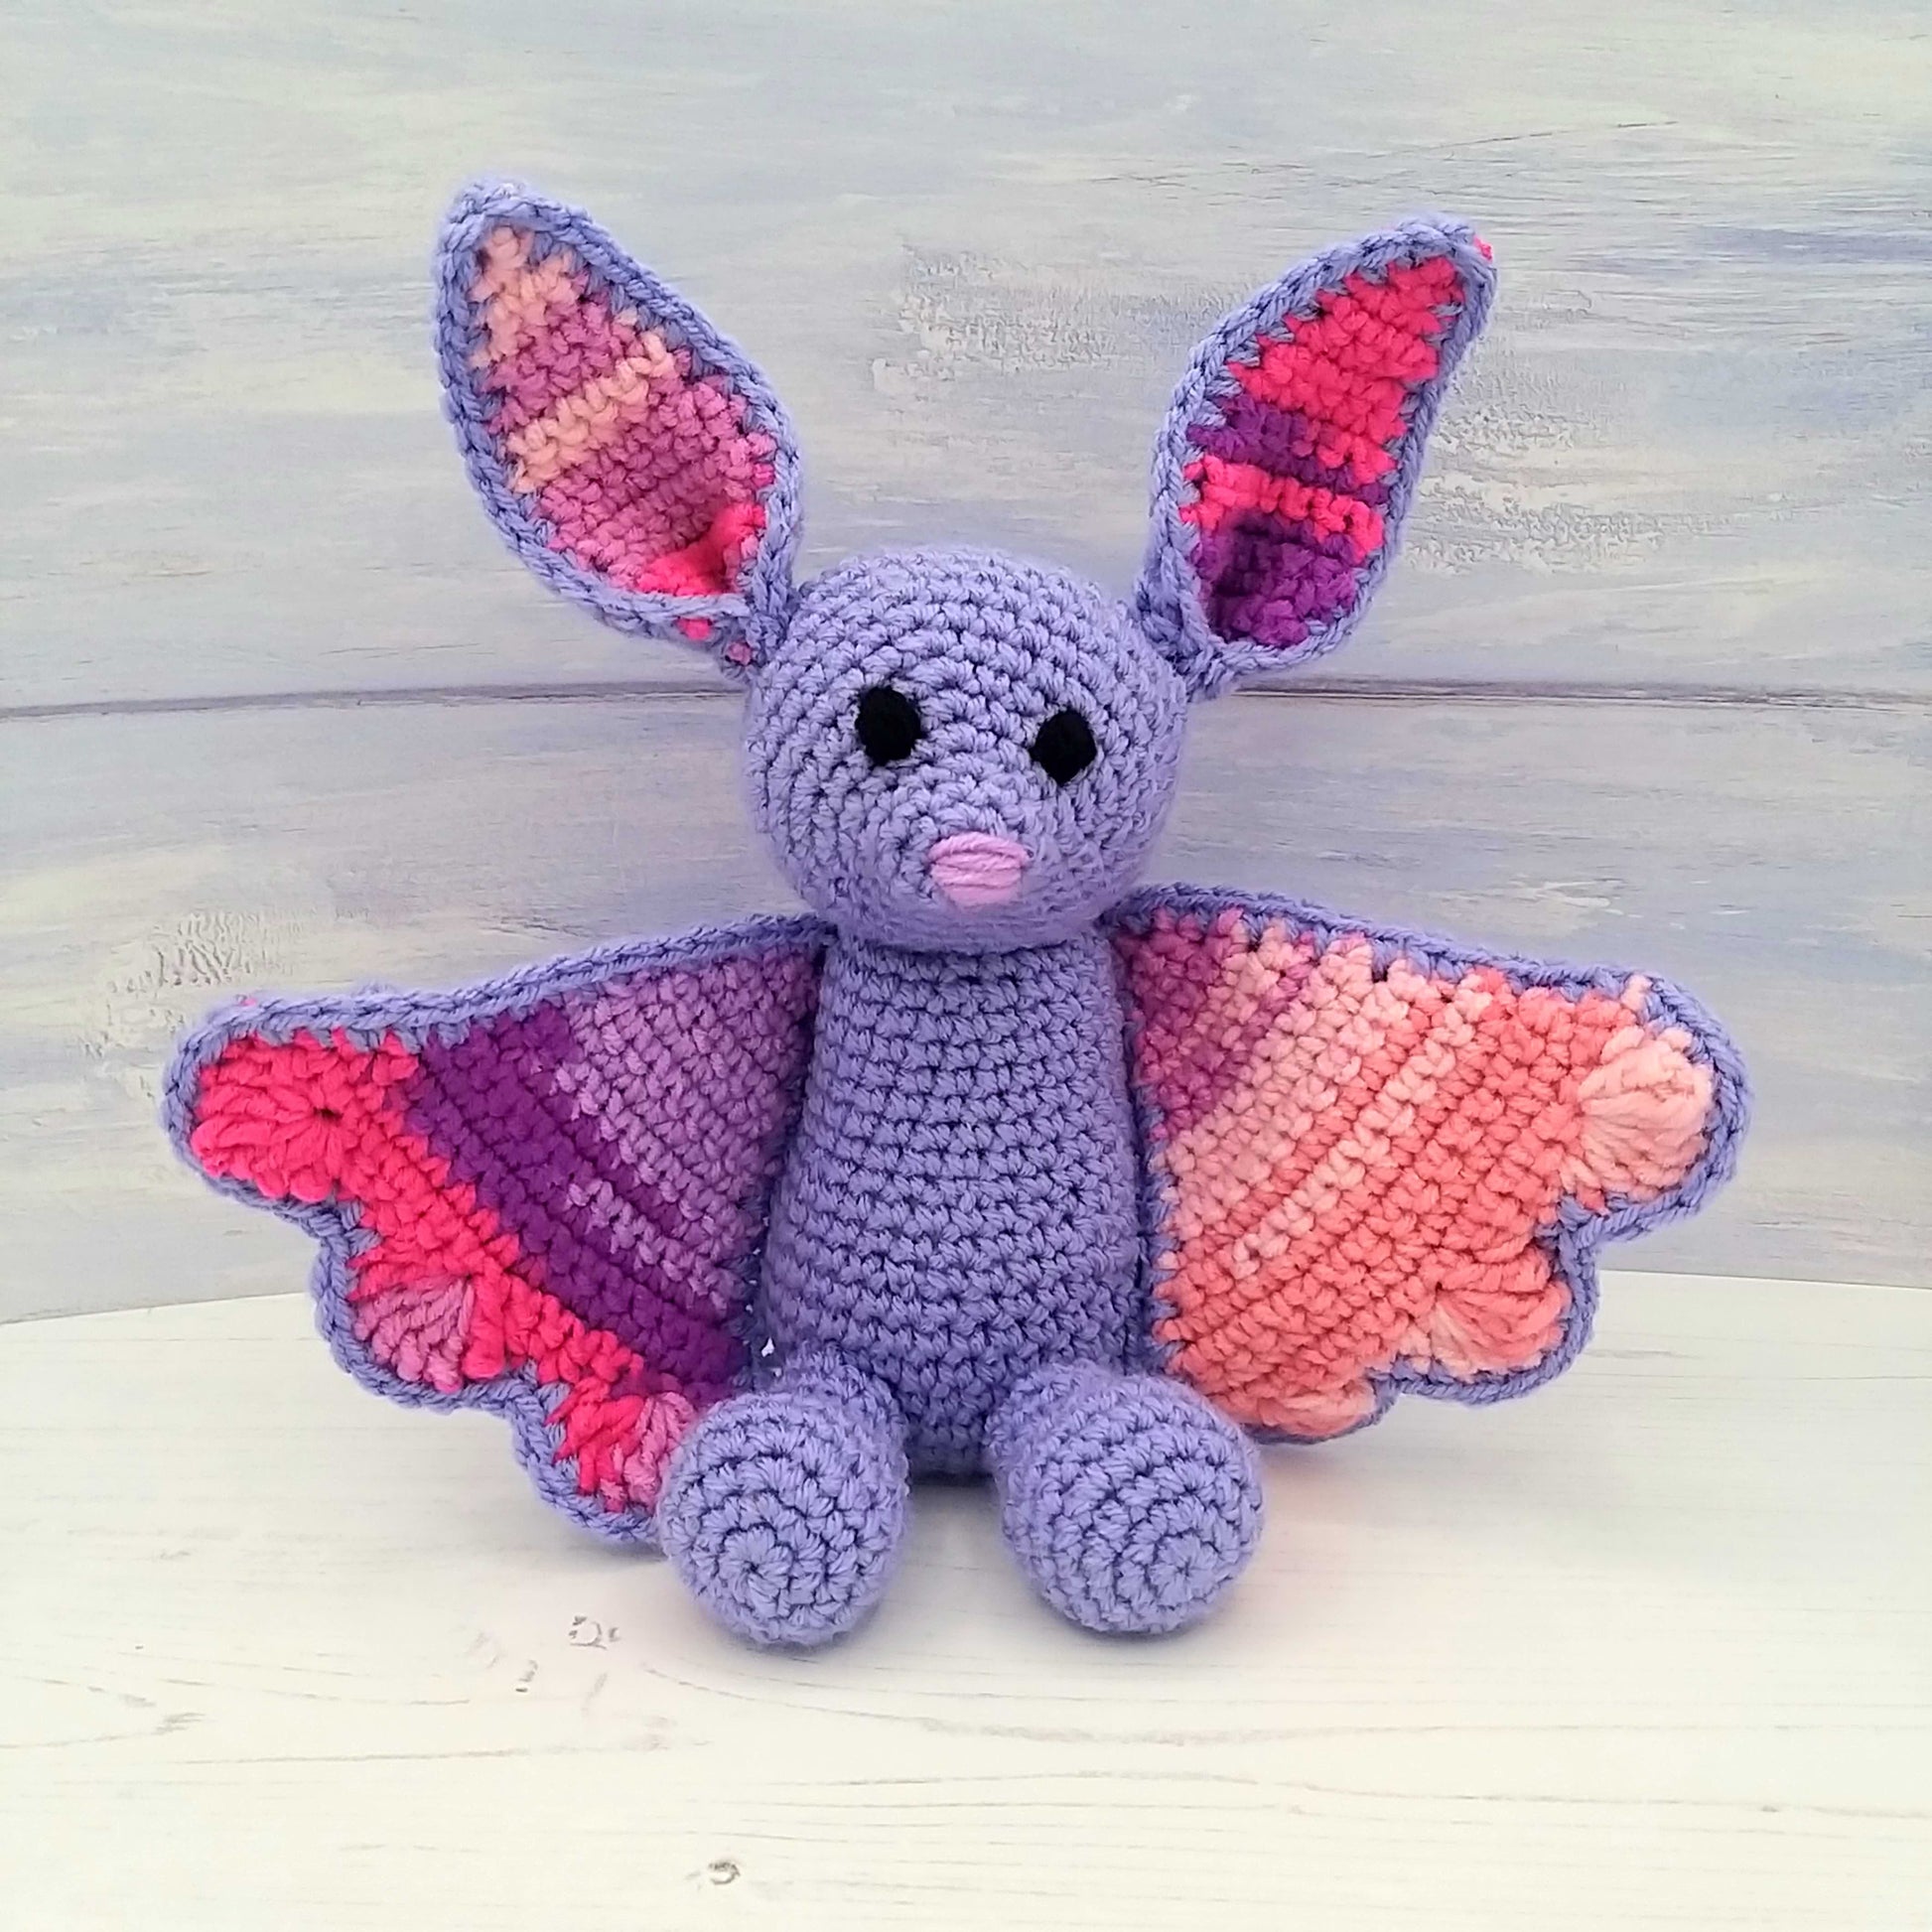 Bella the Crochet Bat